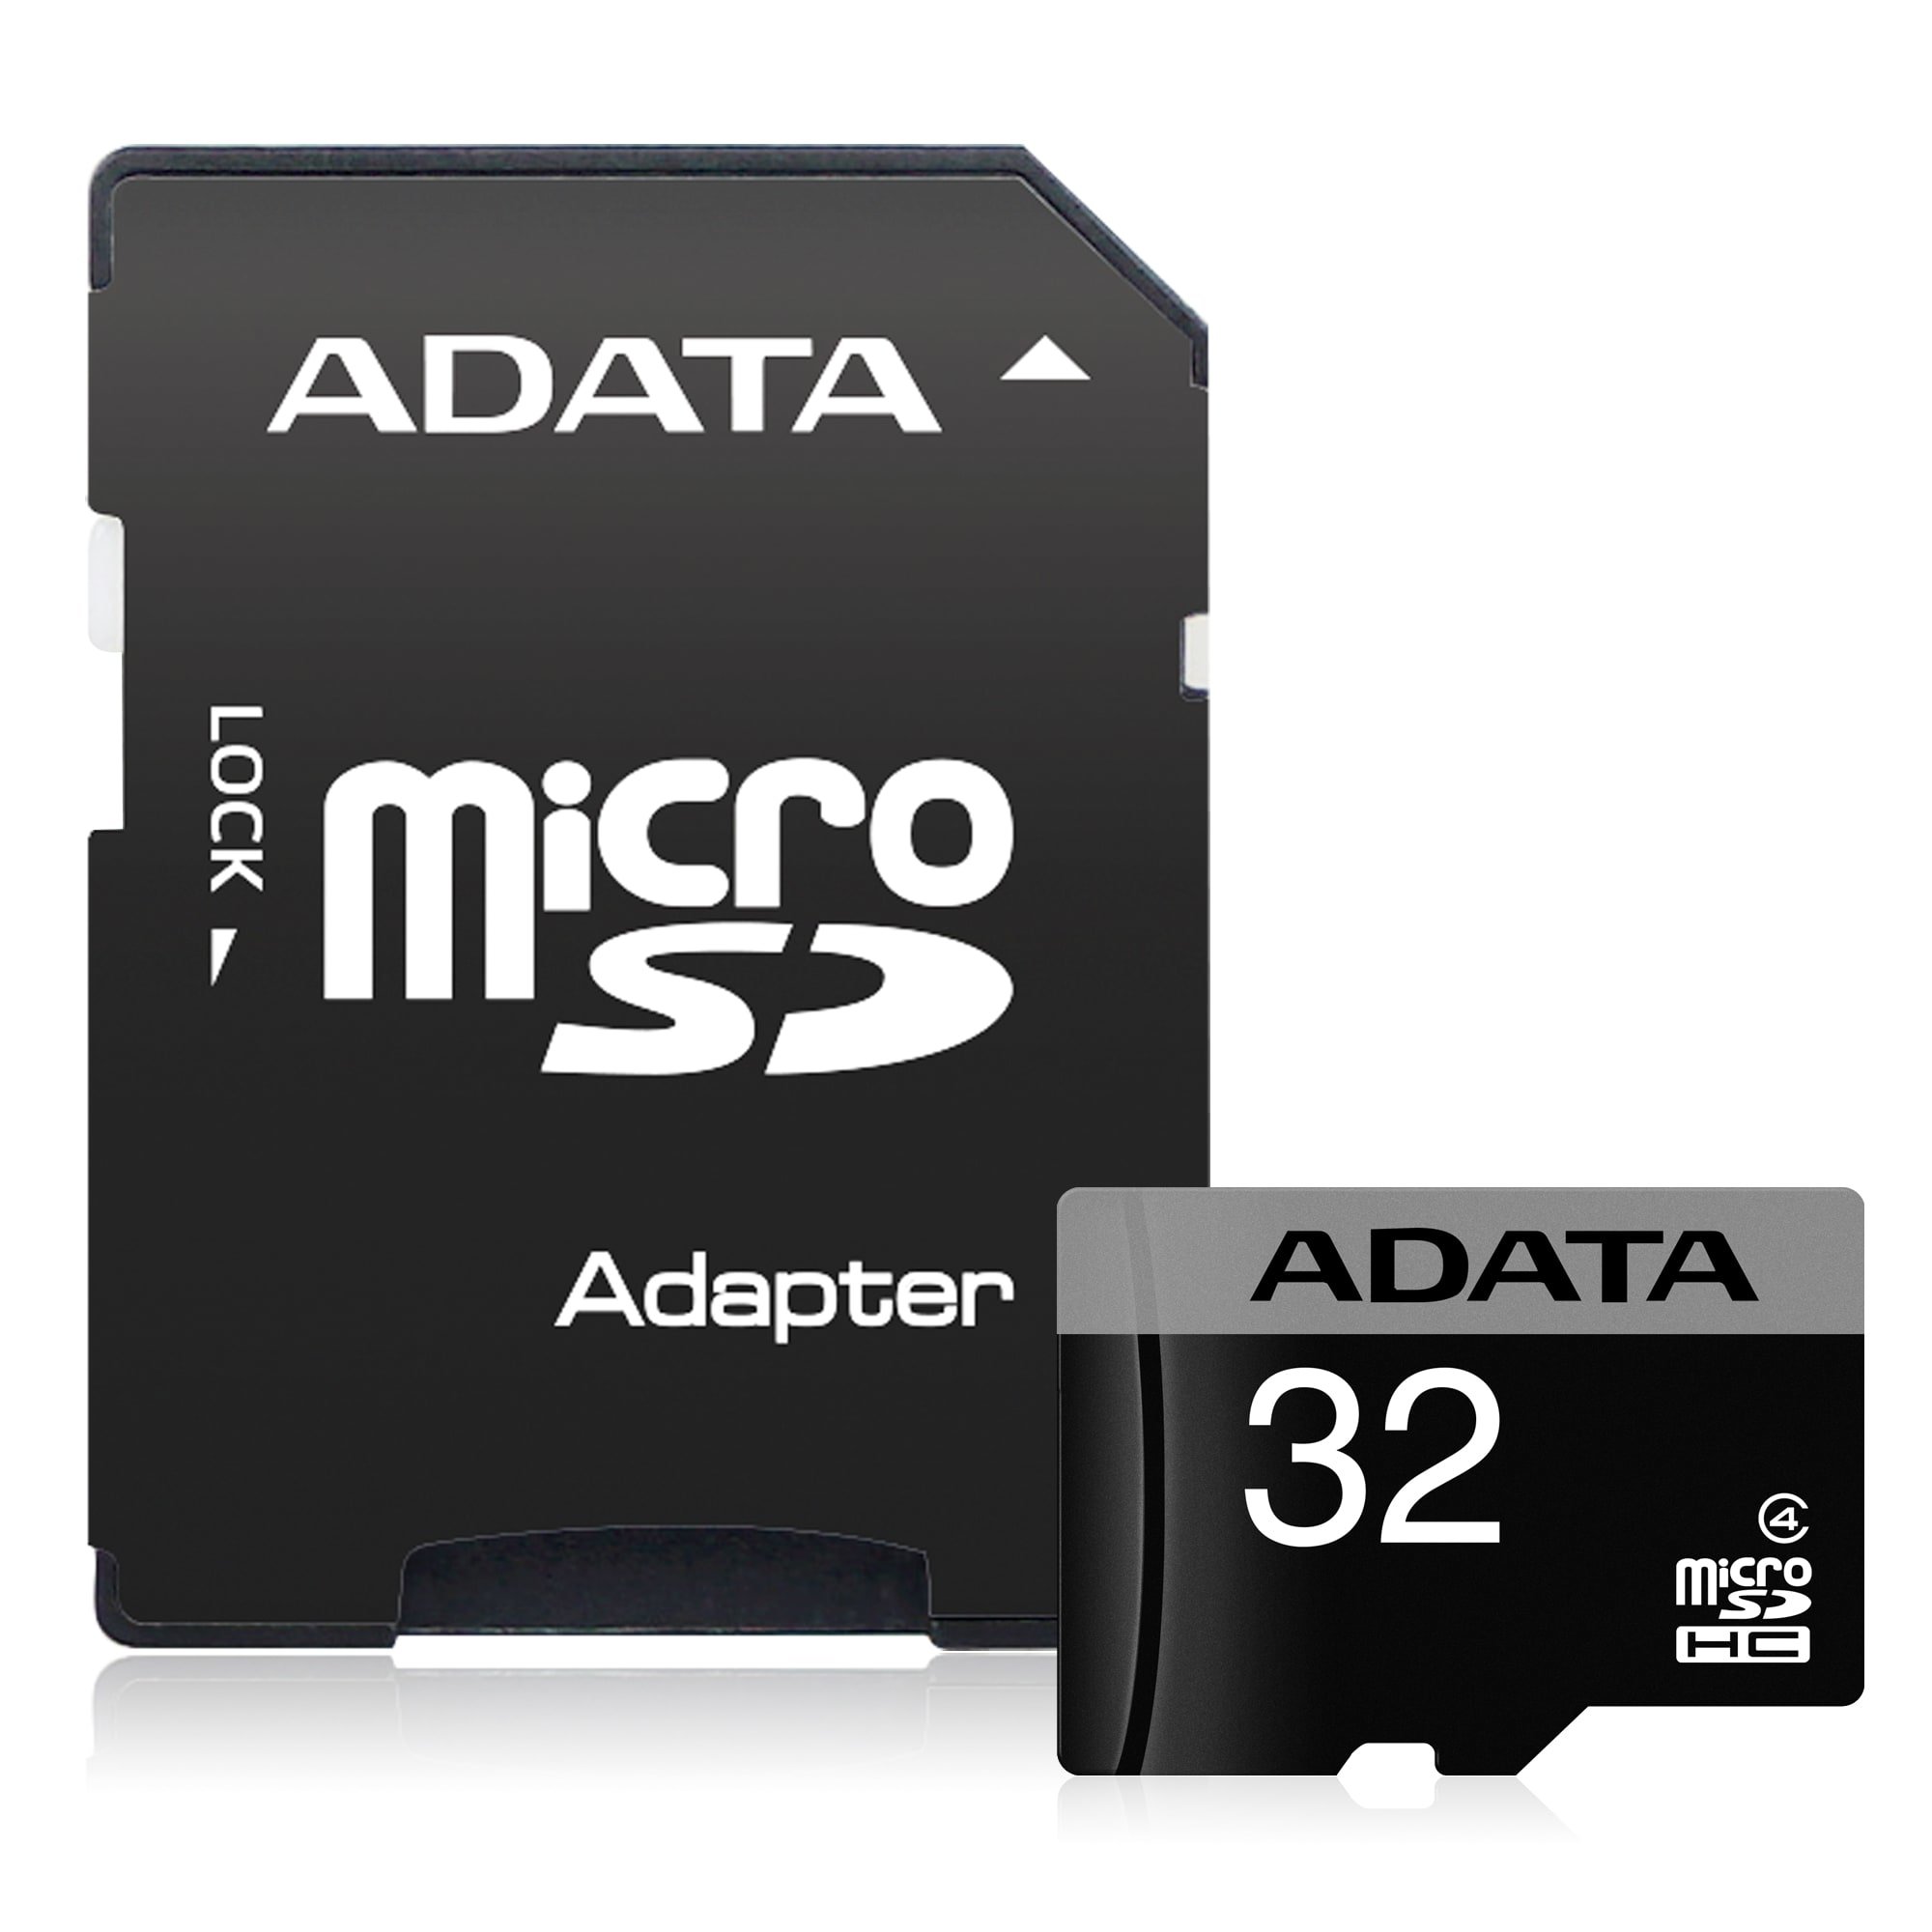 adata_microsdhc_32_adapter